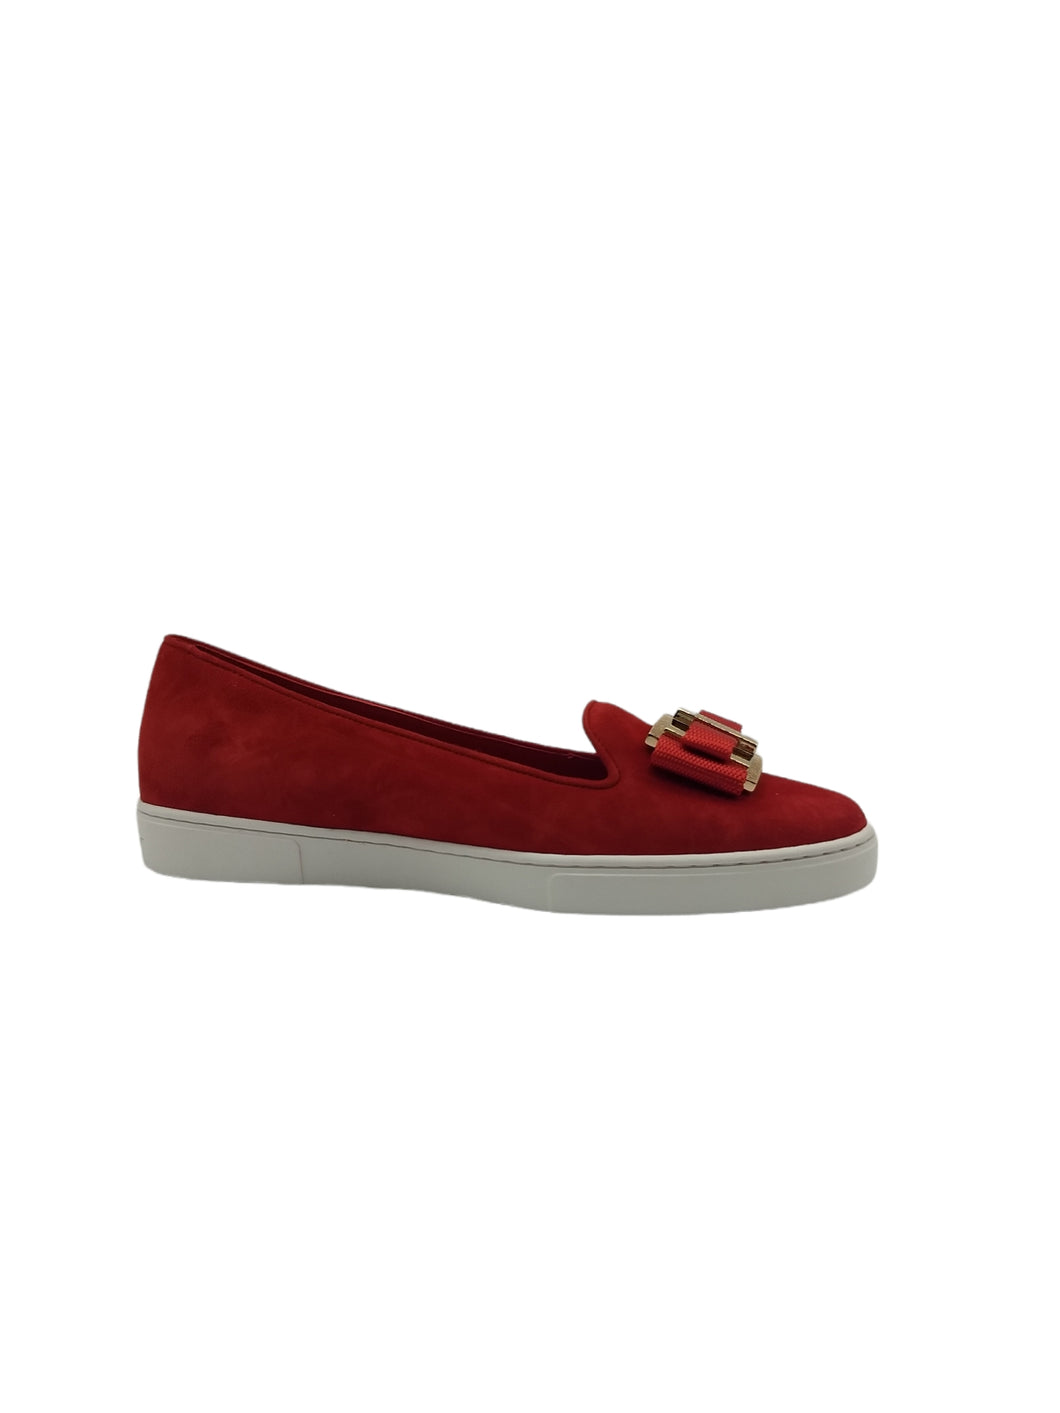 SALVATORE FERRAGAMO Pelagie Women's 672359 Red Flats Size 6 C MSRP $695